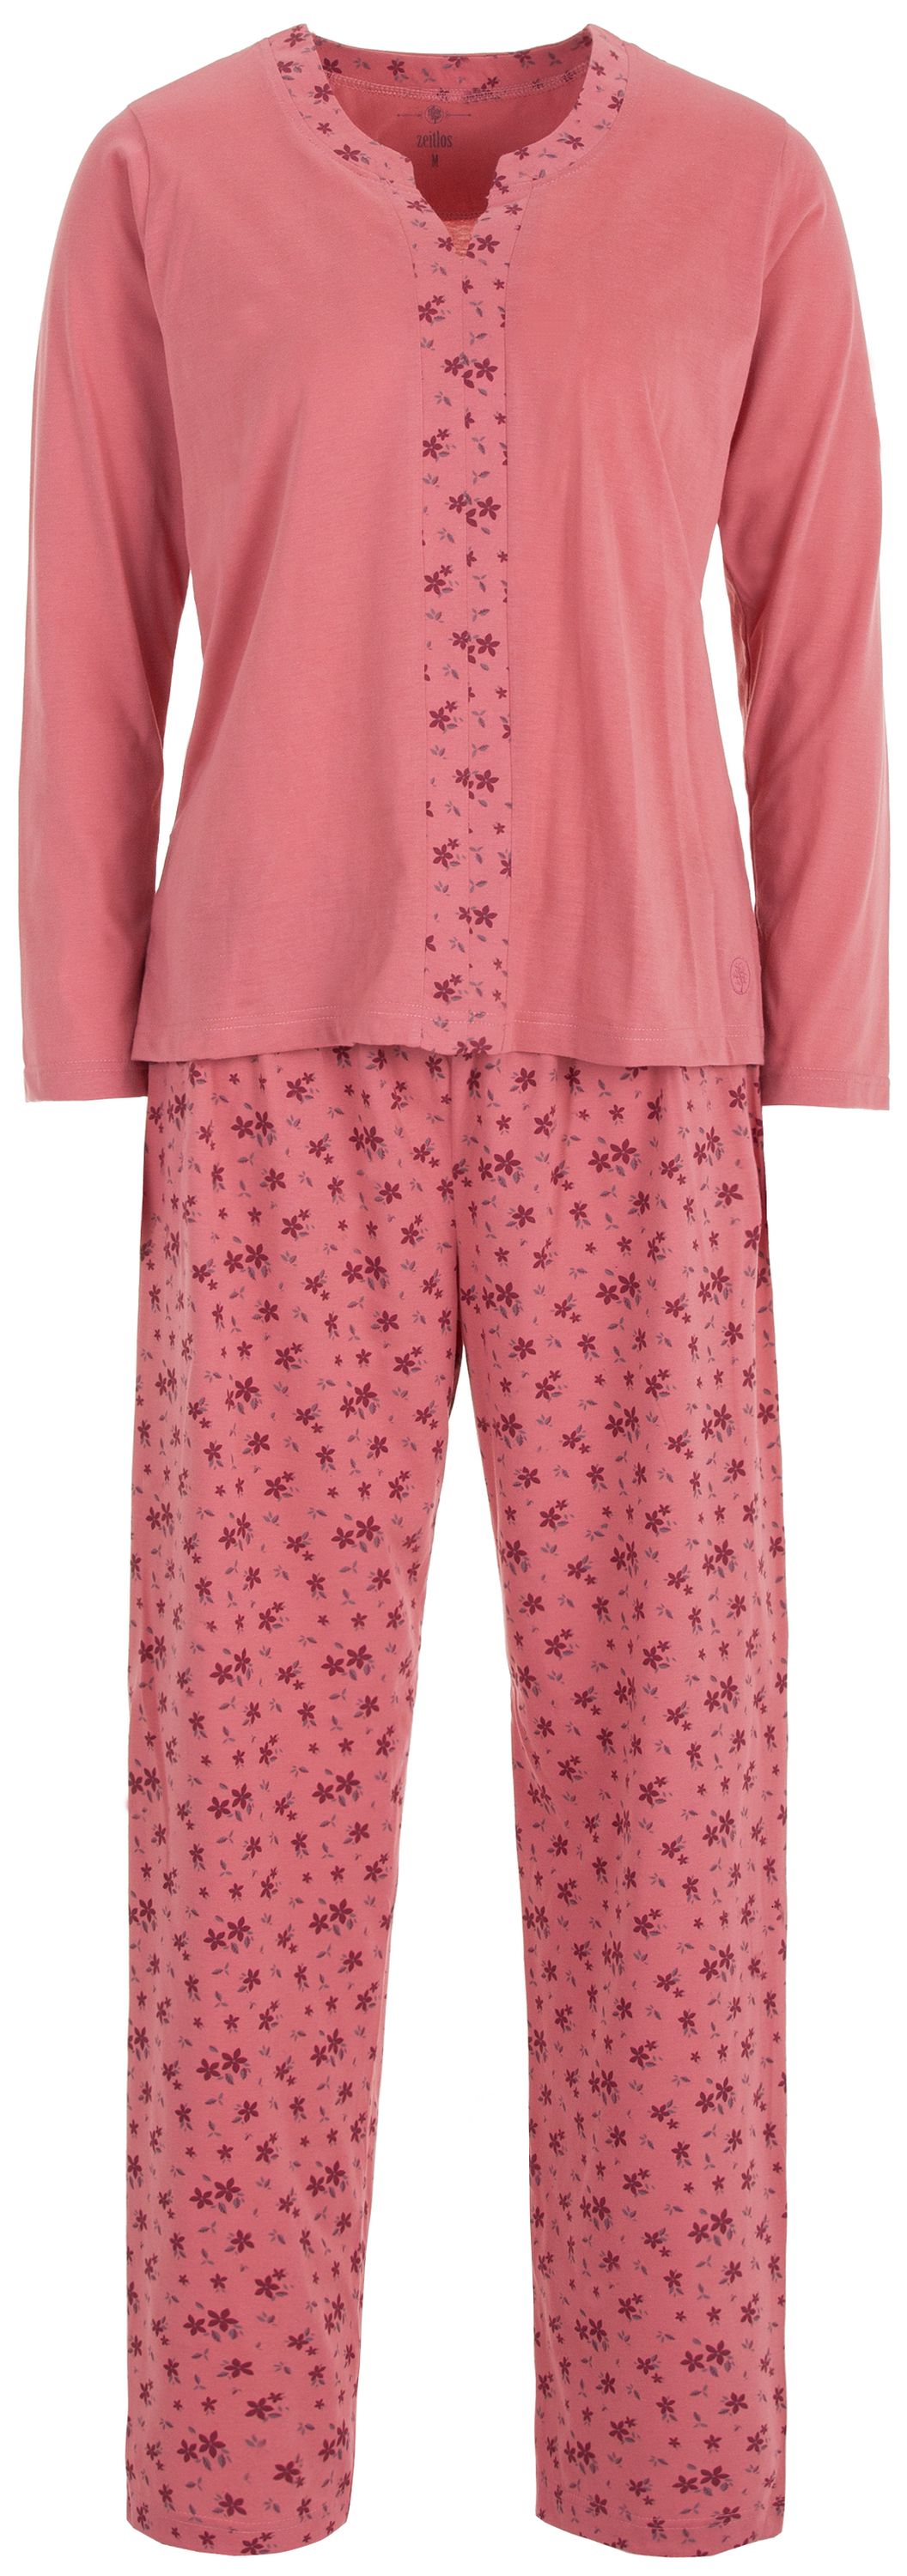 Pyjama Set Langarm - Borte Blüte